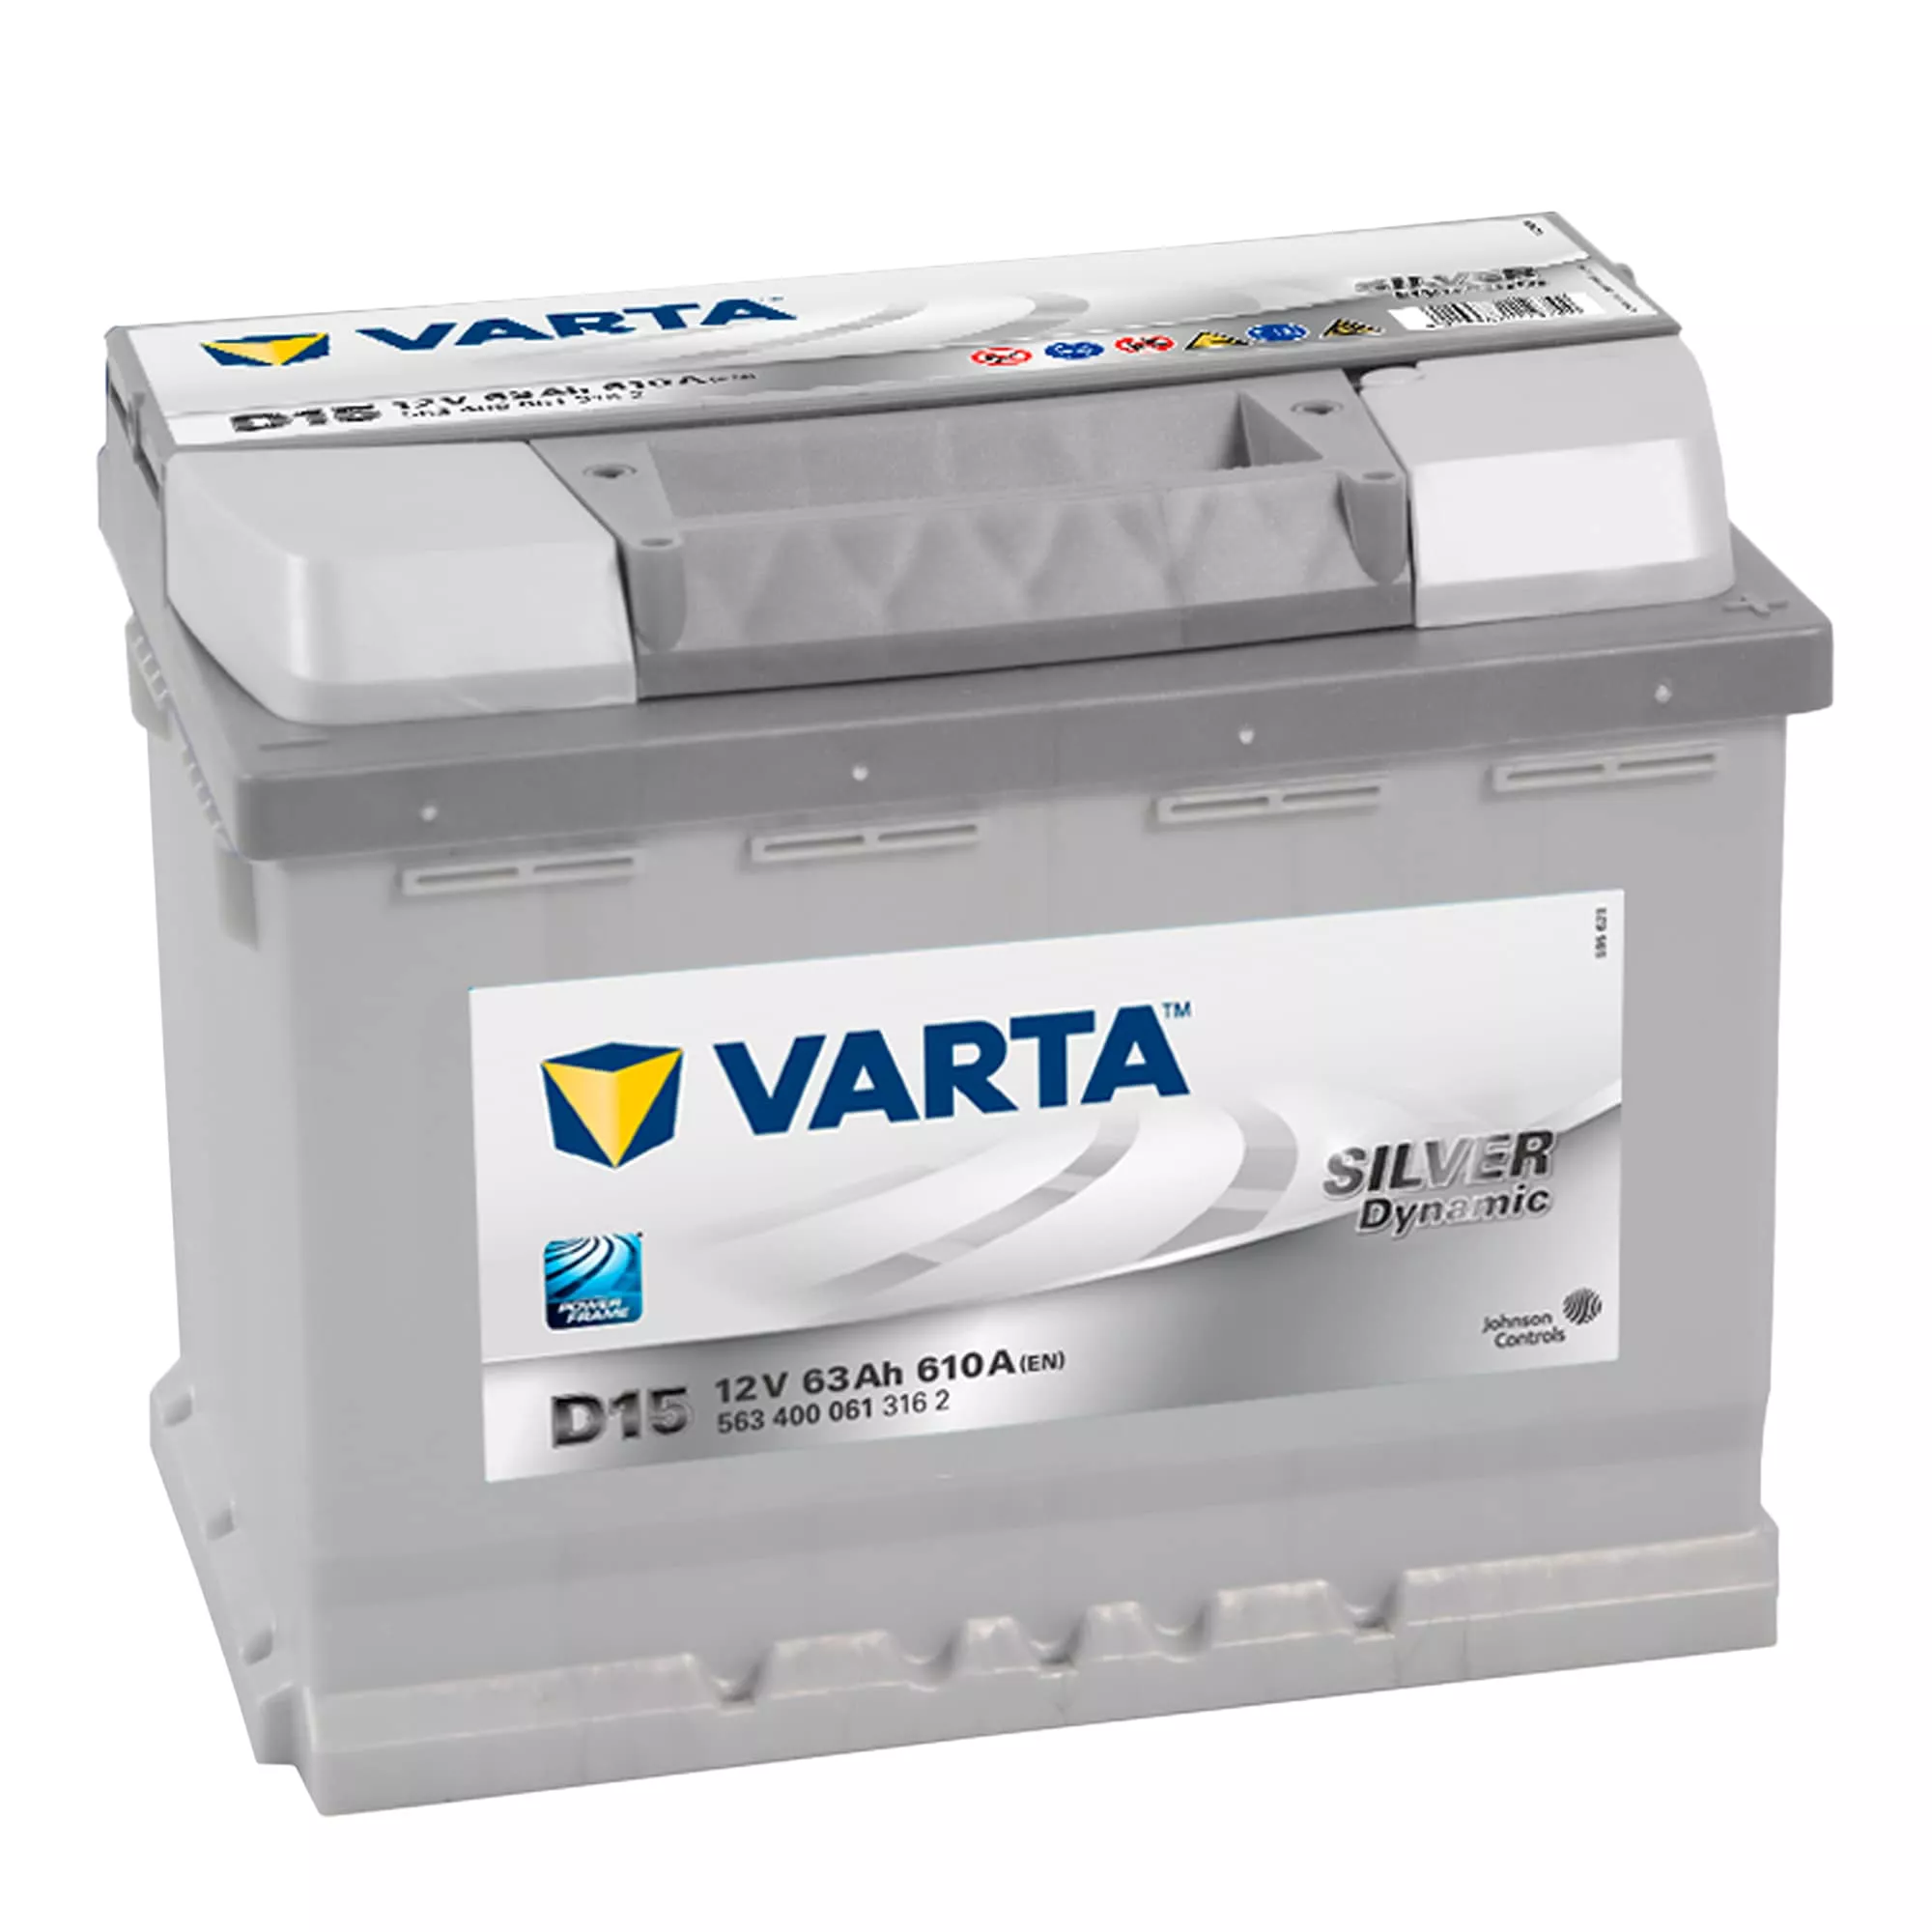 Автомобільний акумулятор VARTA 6CT-63 АЗЕ 563400061 Silver Dynamic (D15)